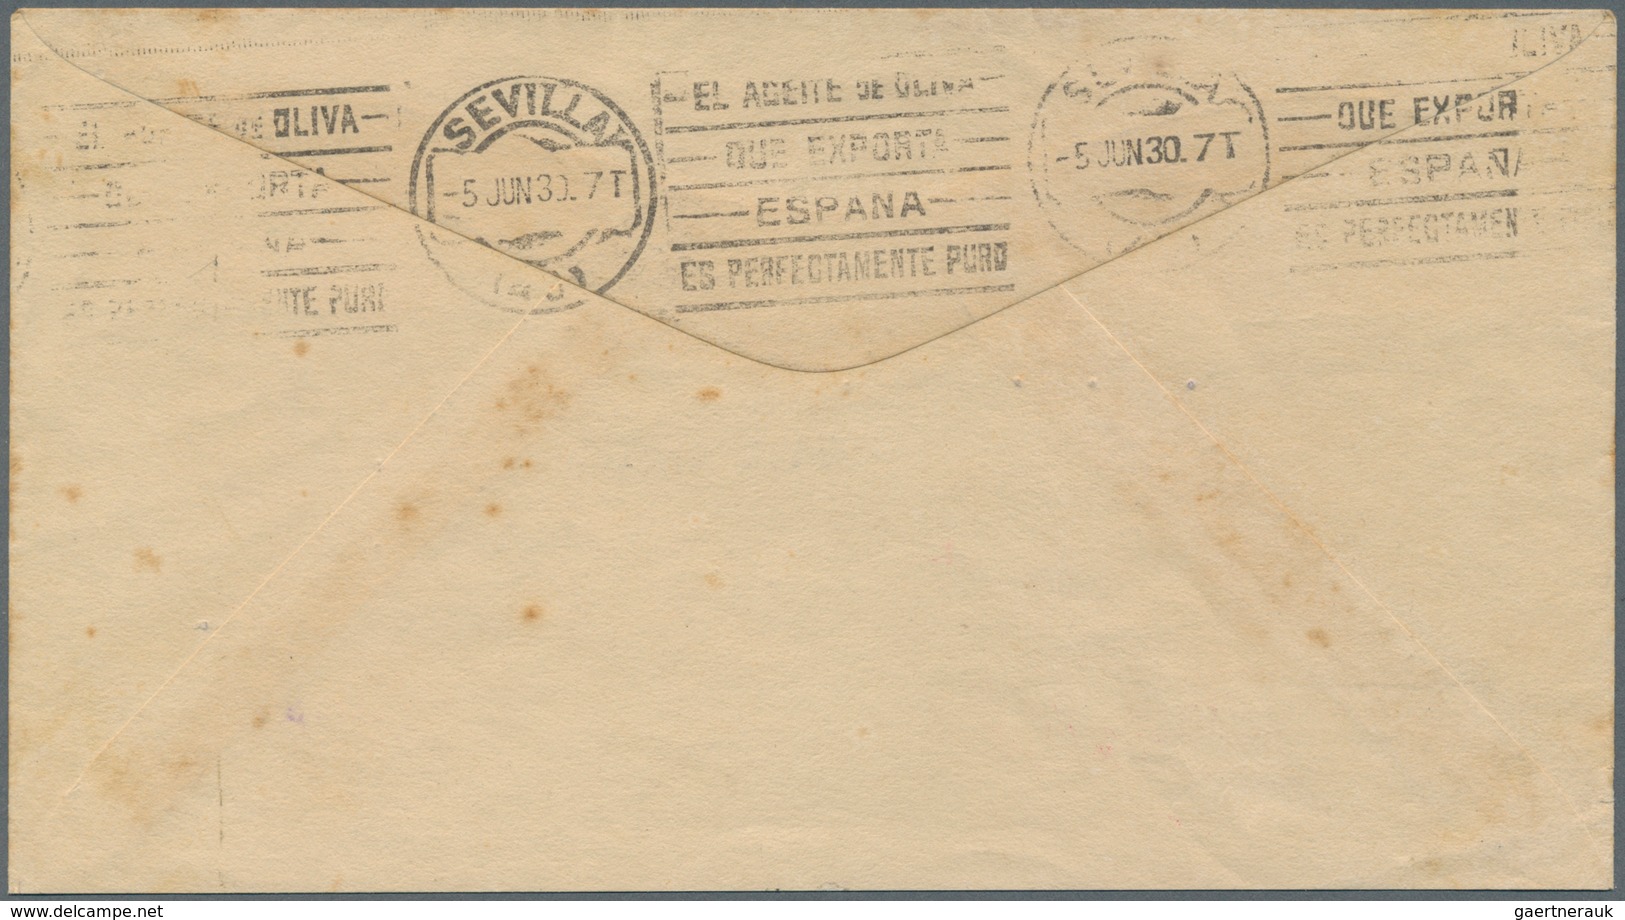 Zeppelinpost Übersee: 1930. Original Airmail Cover Flown On The Graf Zeppelin Airship's 1930 Südamer - Zeppeline